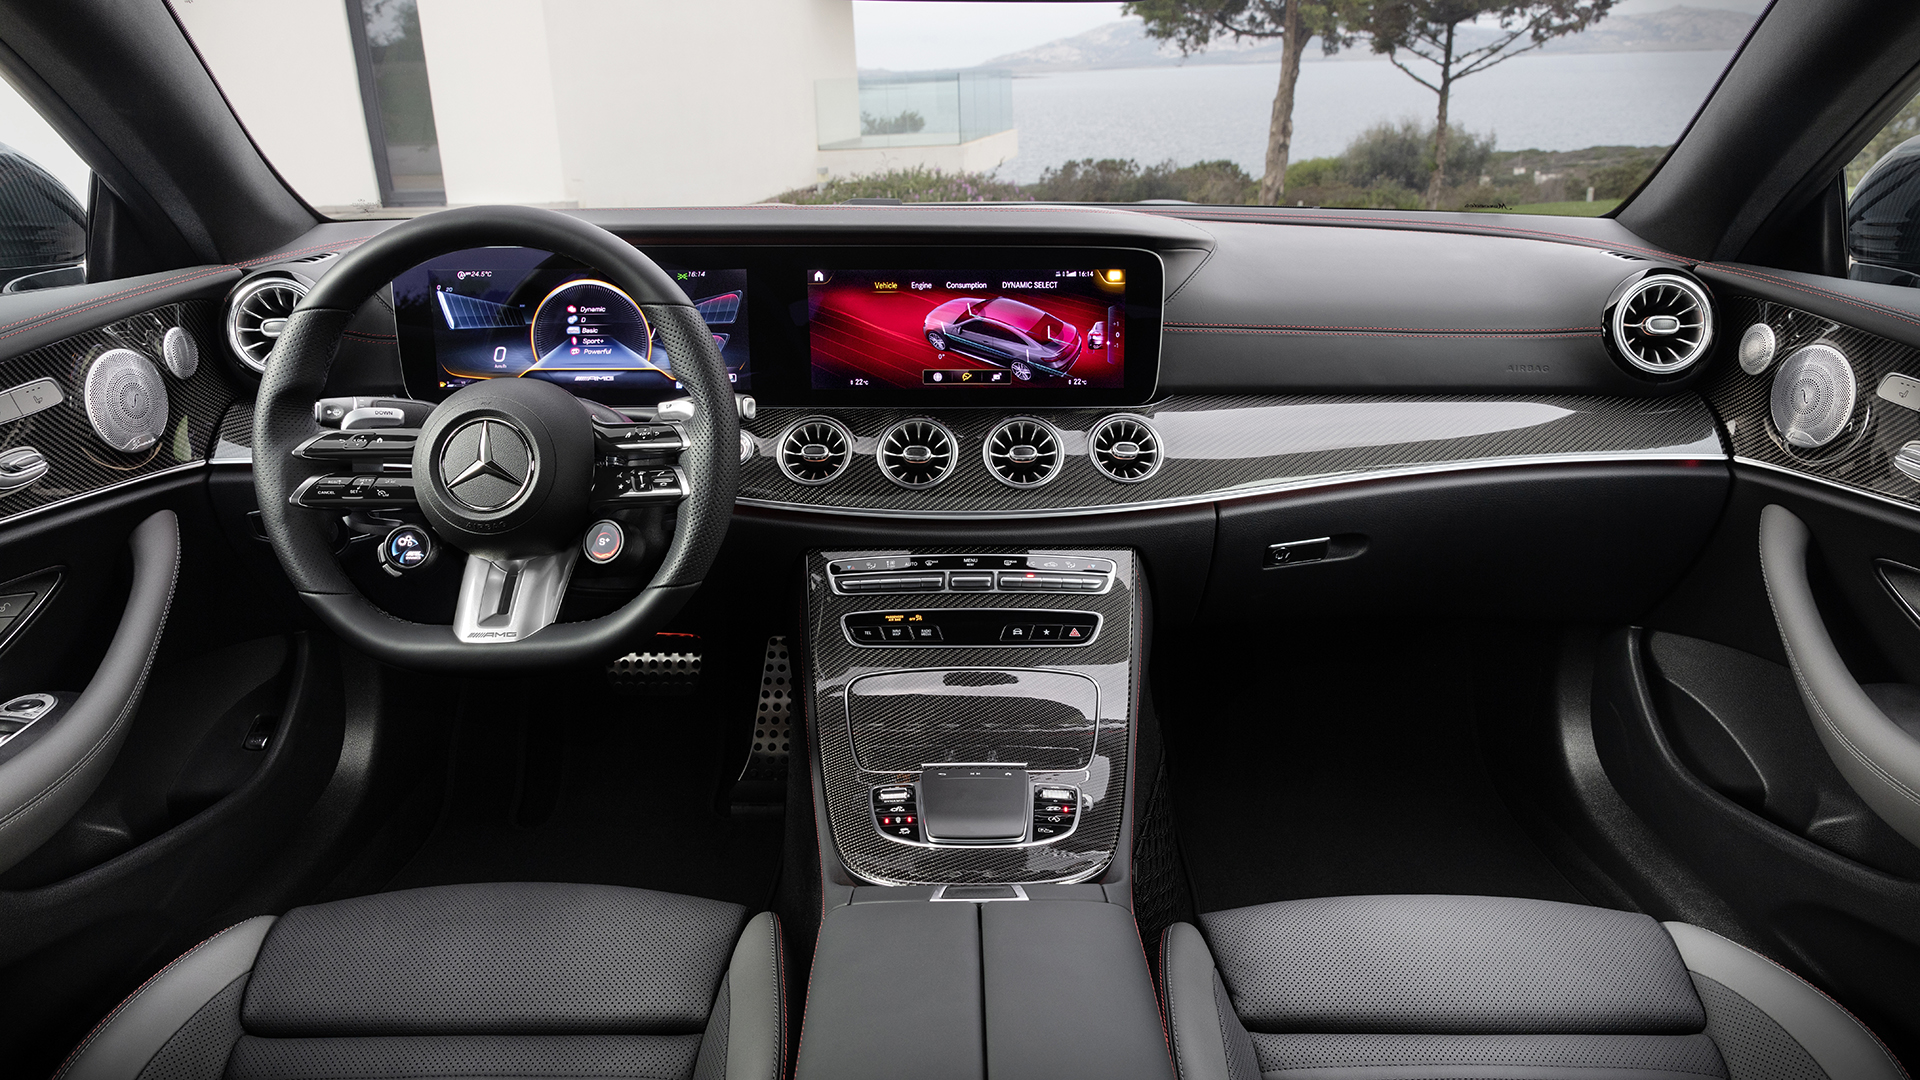 Mercedes-AMG e53 coupe interior